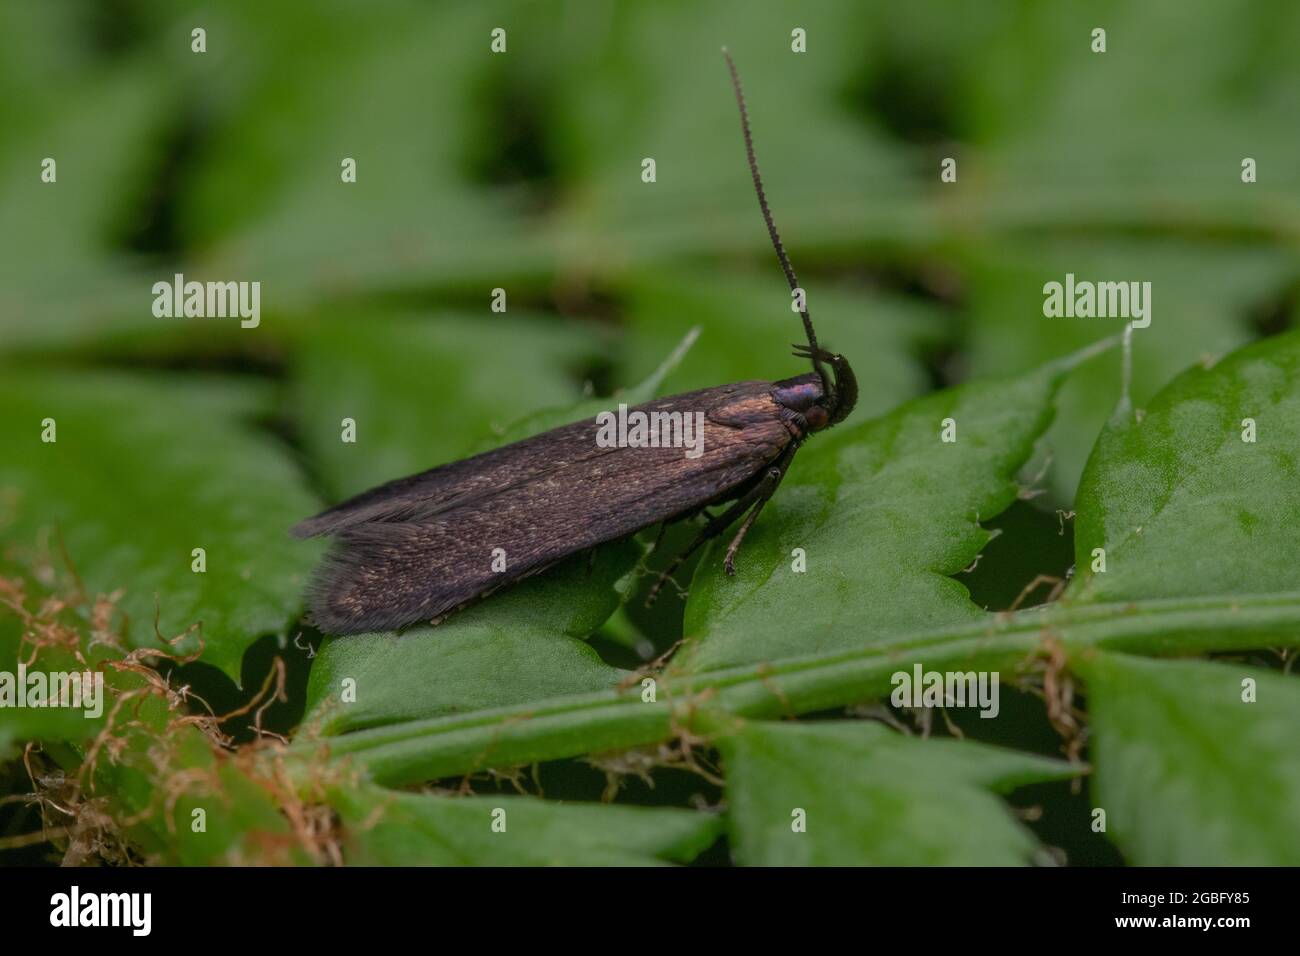 Closeup shot of a moth on a leaf Stock Photo